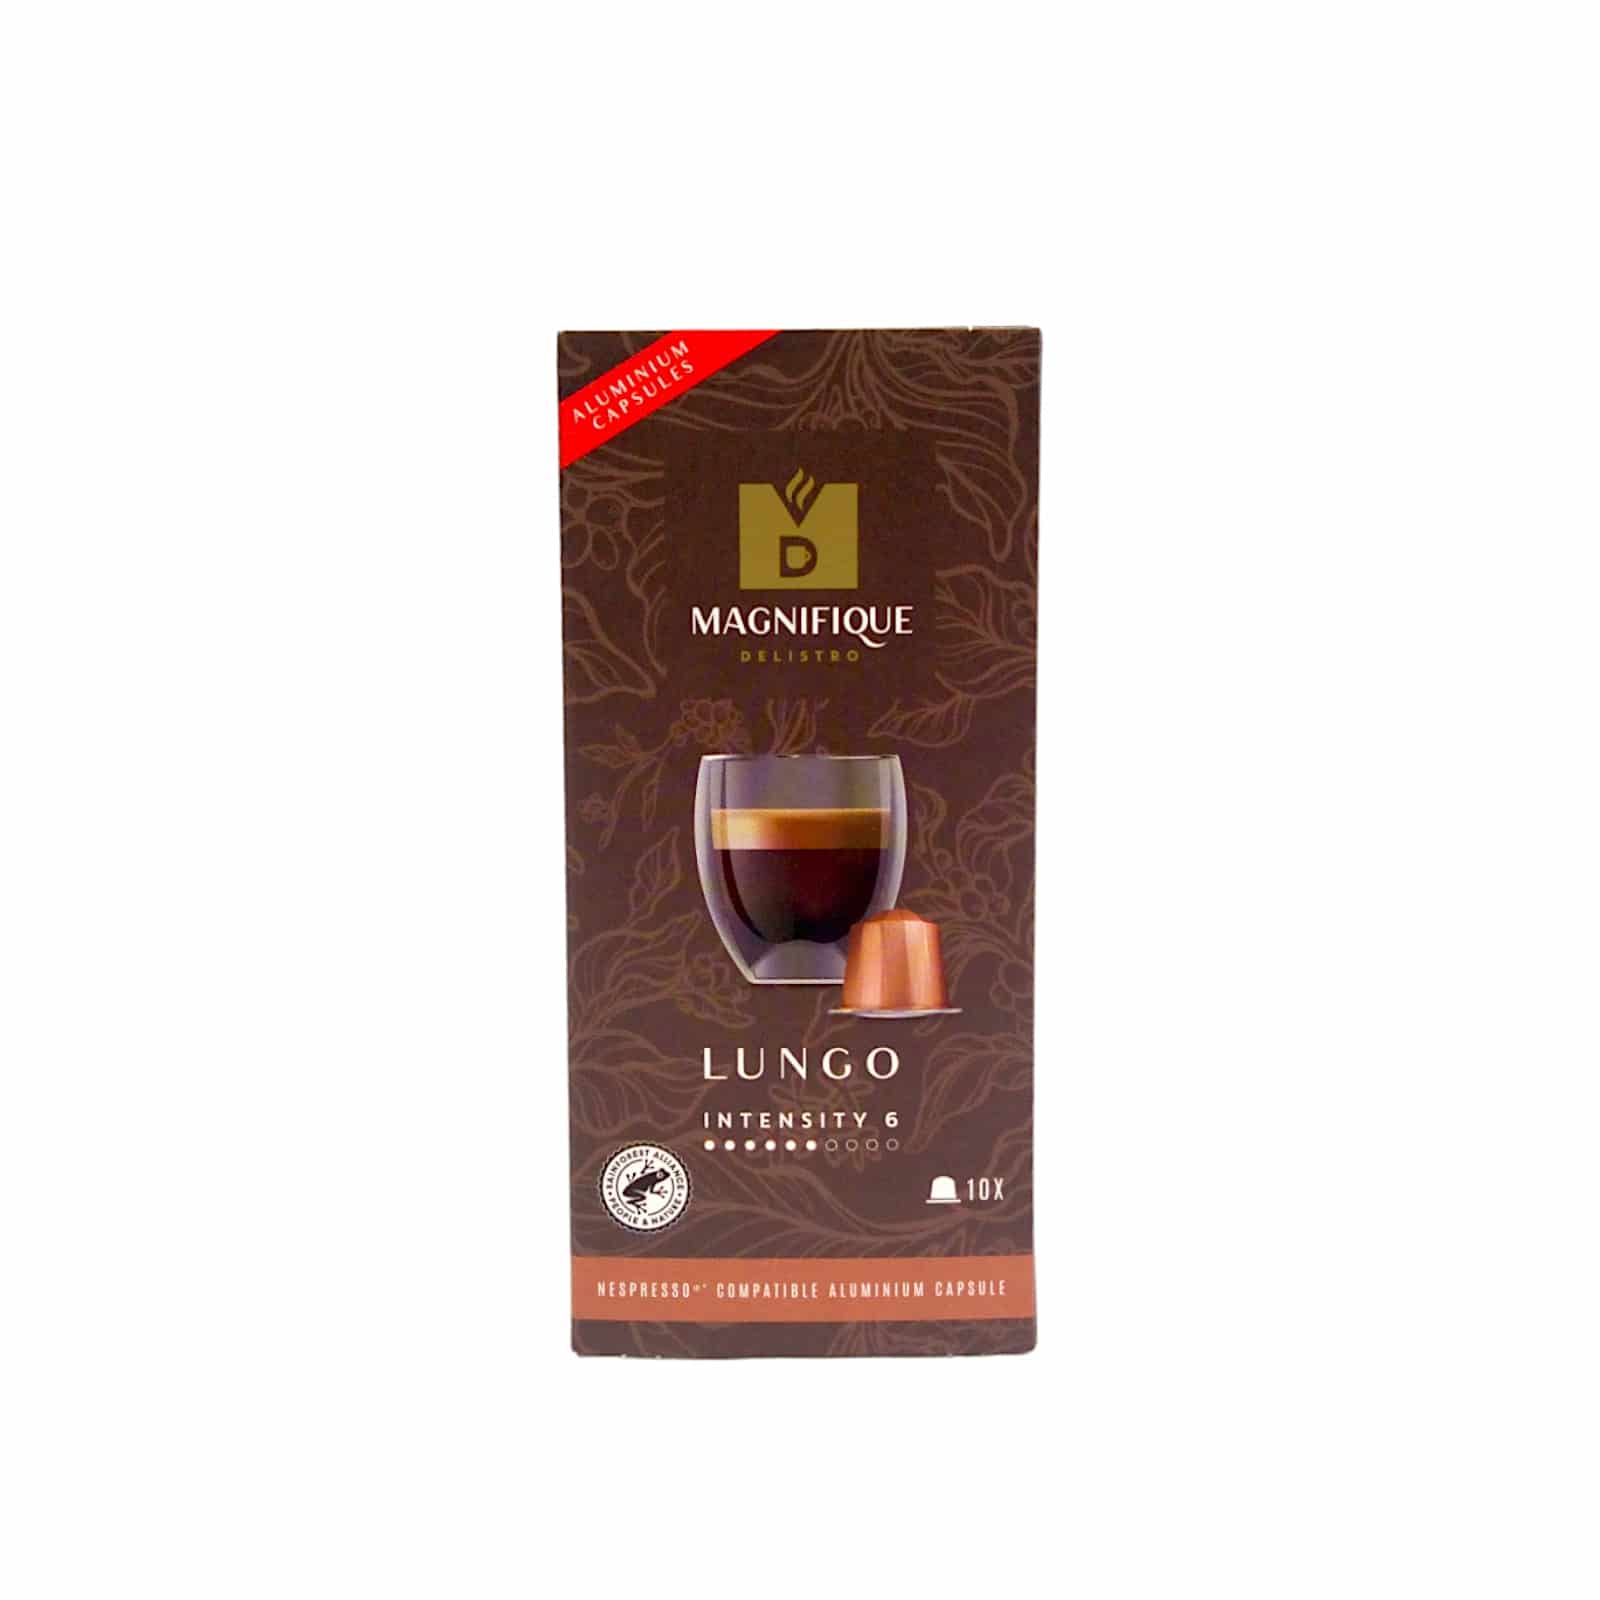 Magnifique Delistro Coffee Lungo 10er 52g